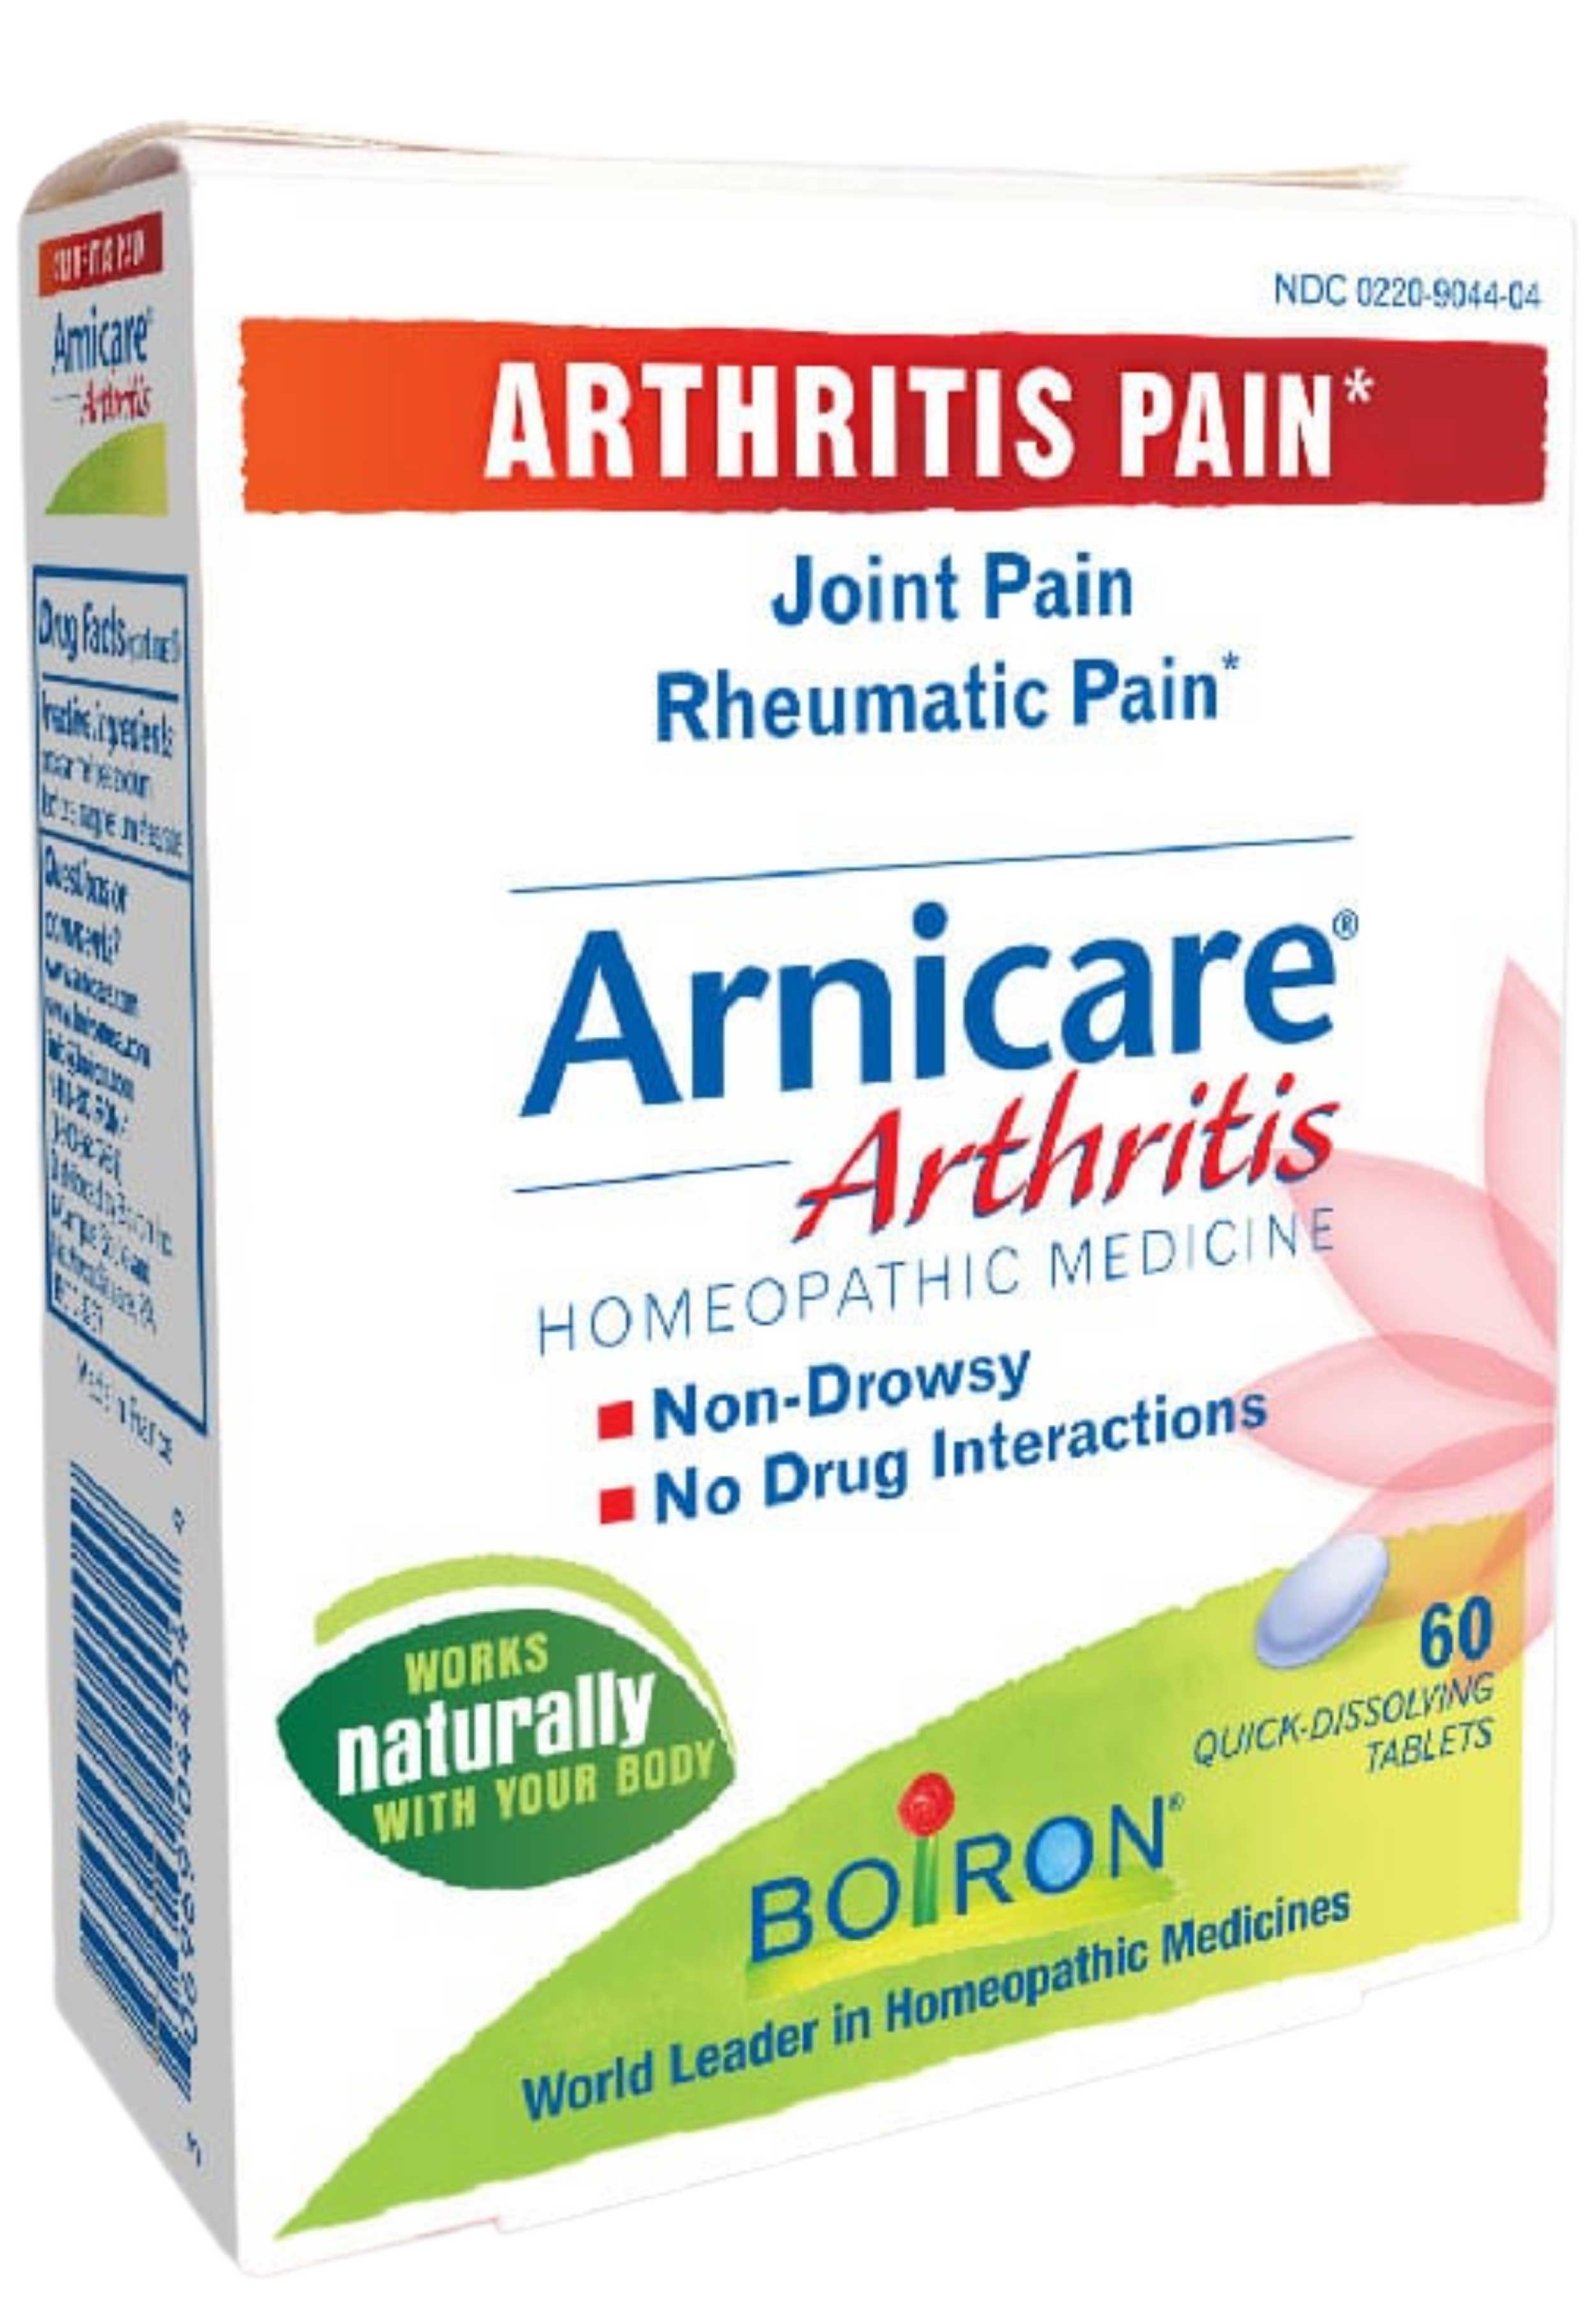 Boiron Homeopathics Arnicare Arthritis